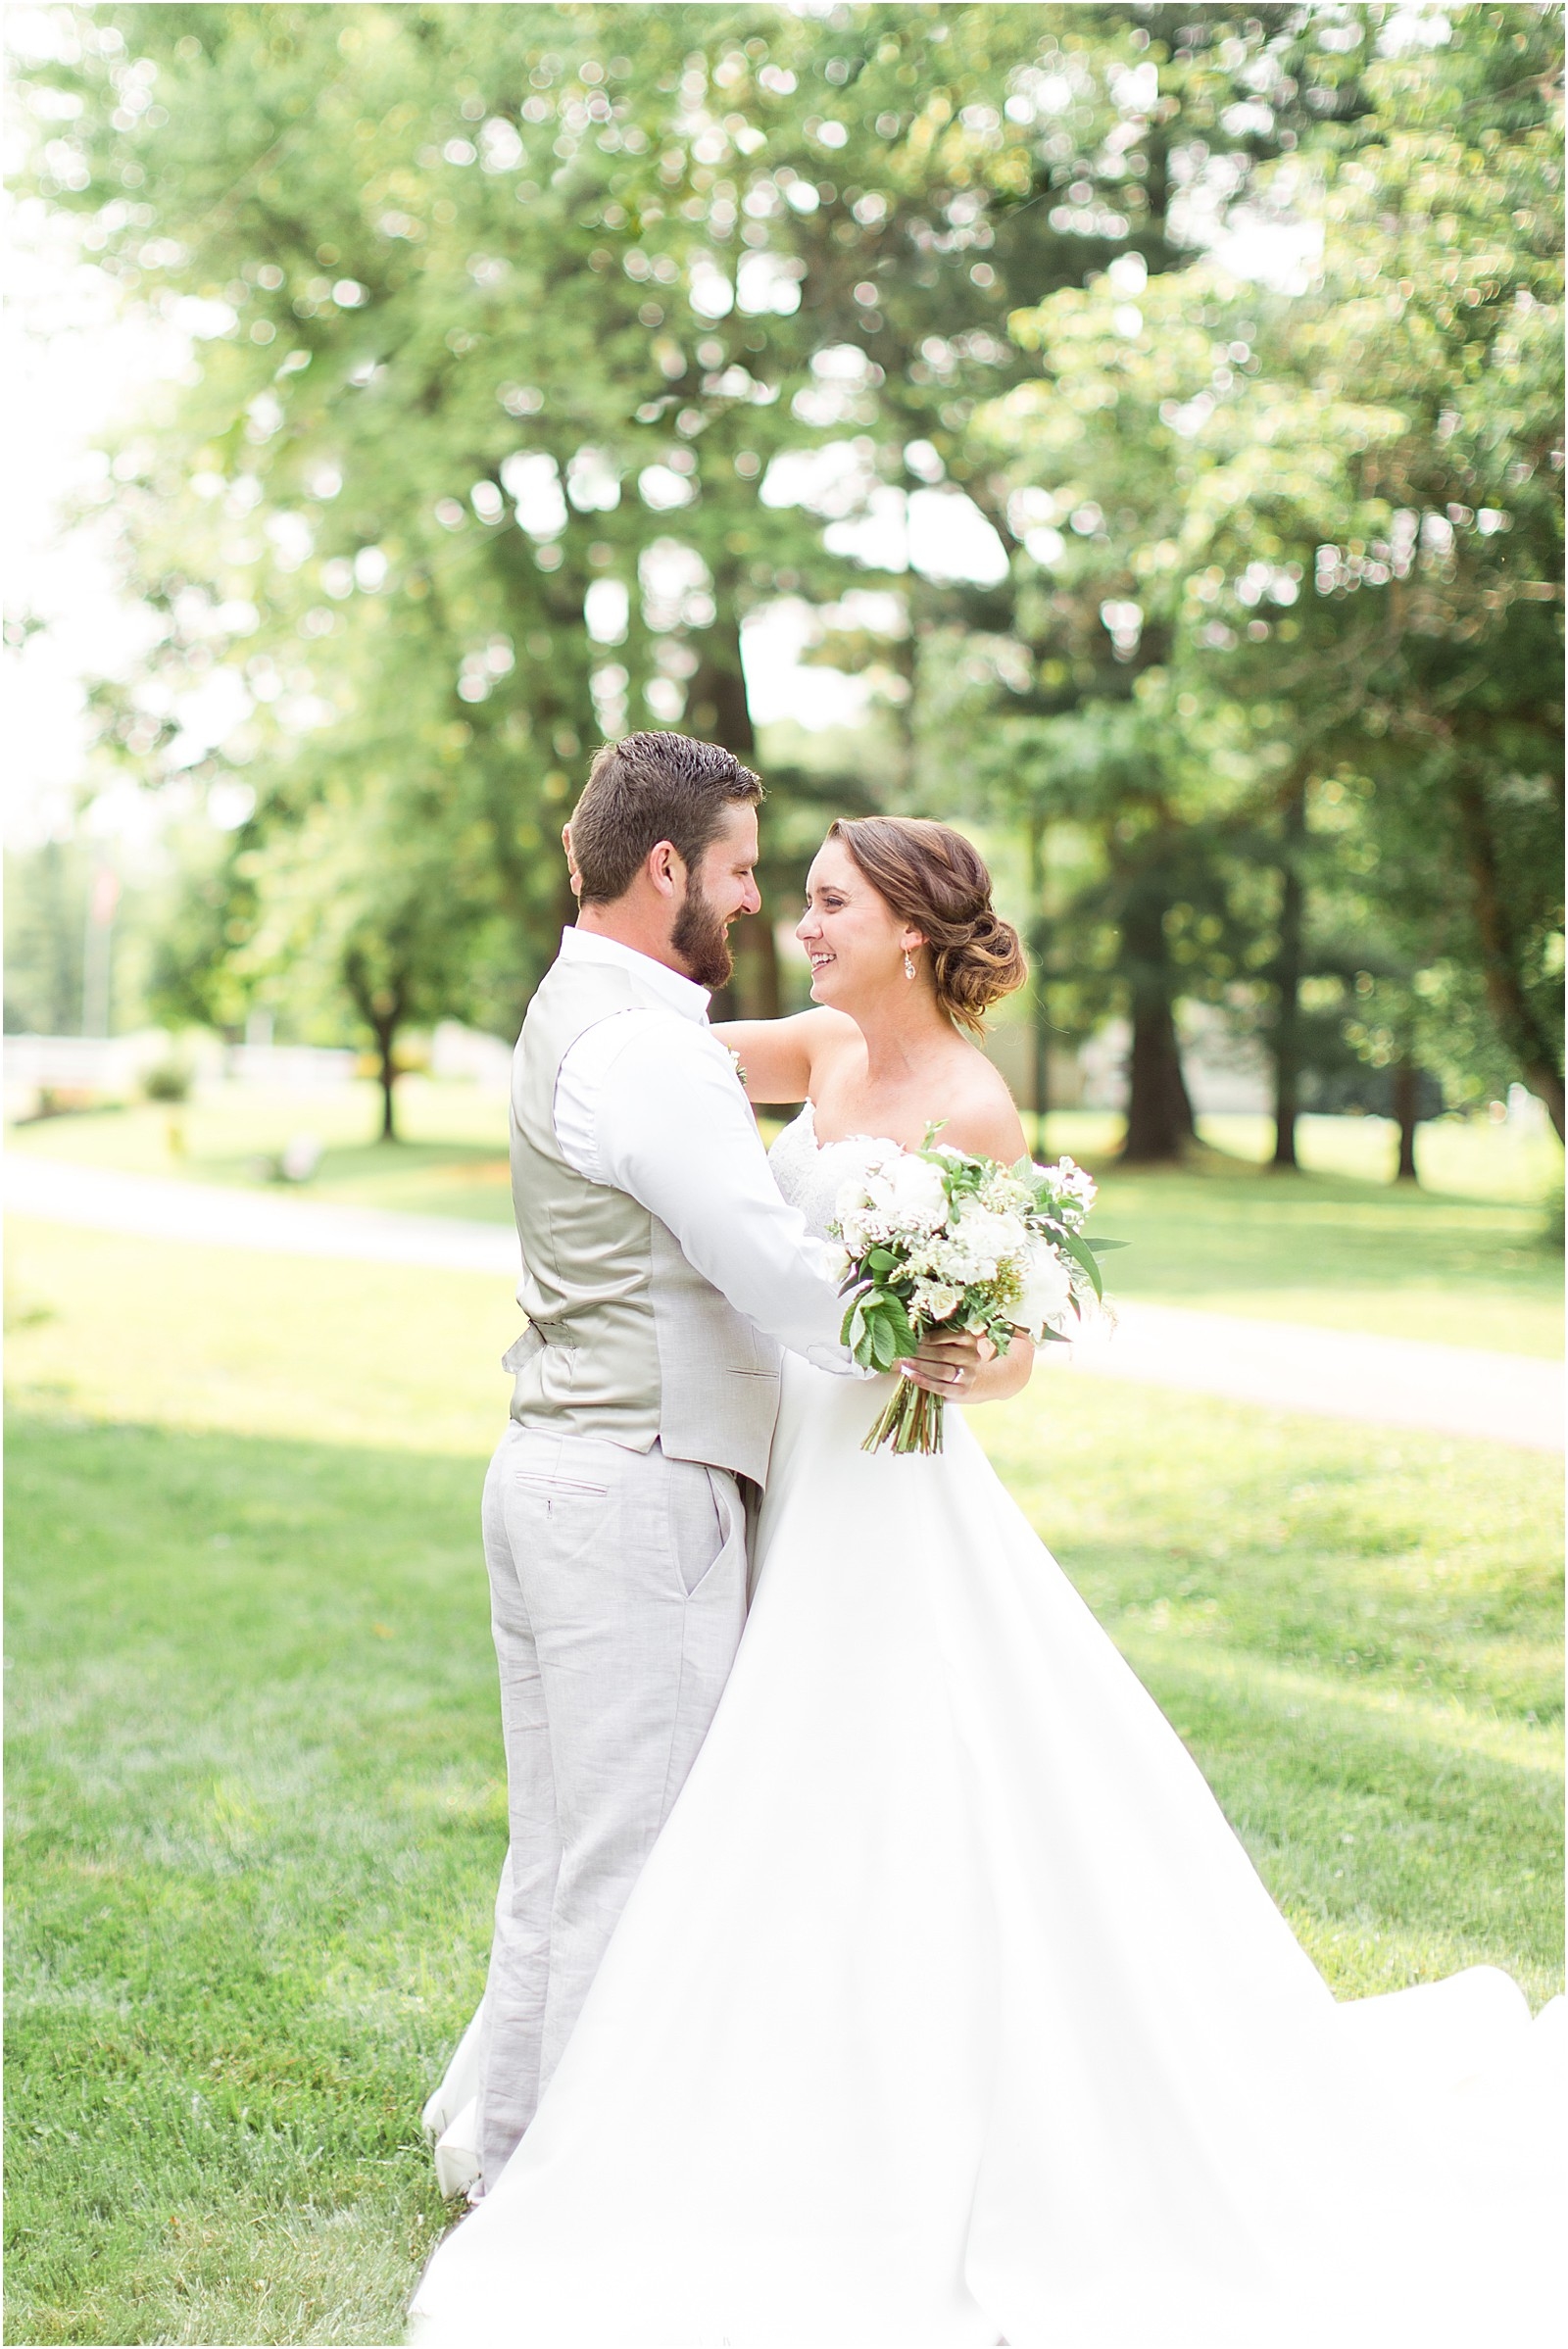 A Evansville Indiana Backyard Wedding | Bailey and Ben 051.jpg